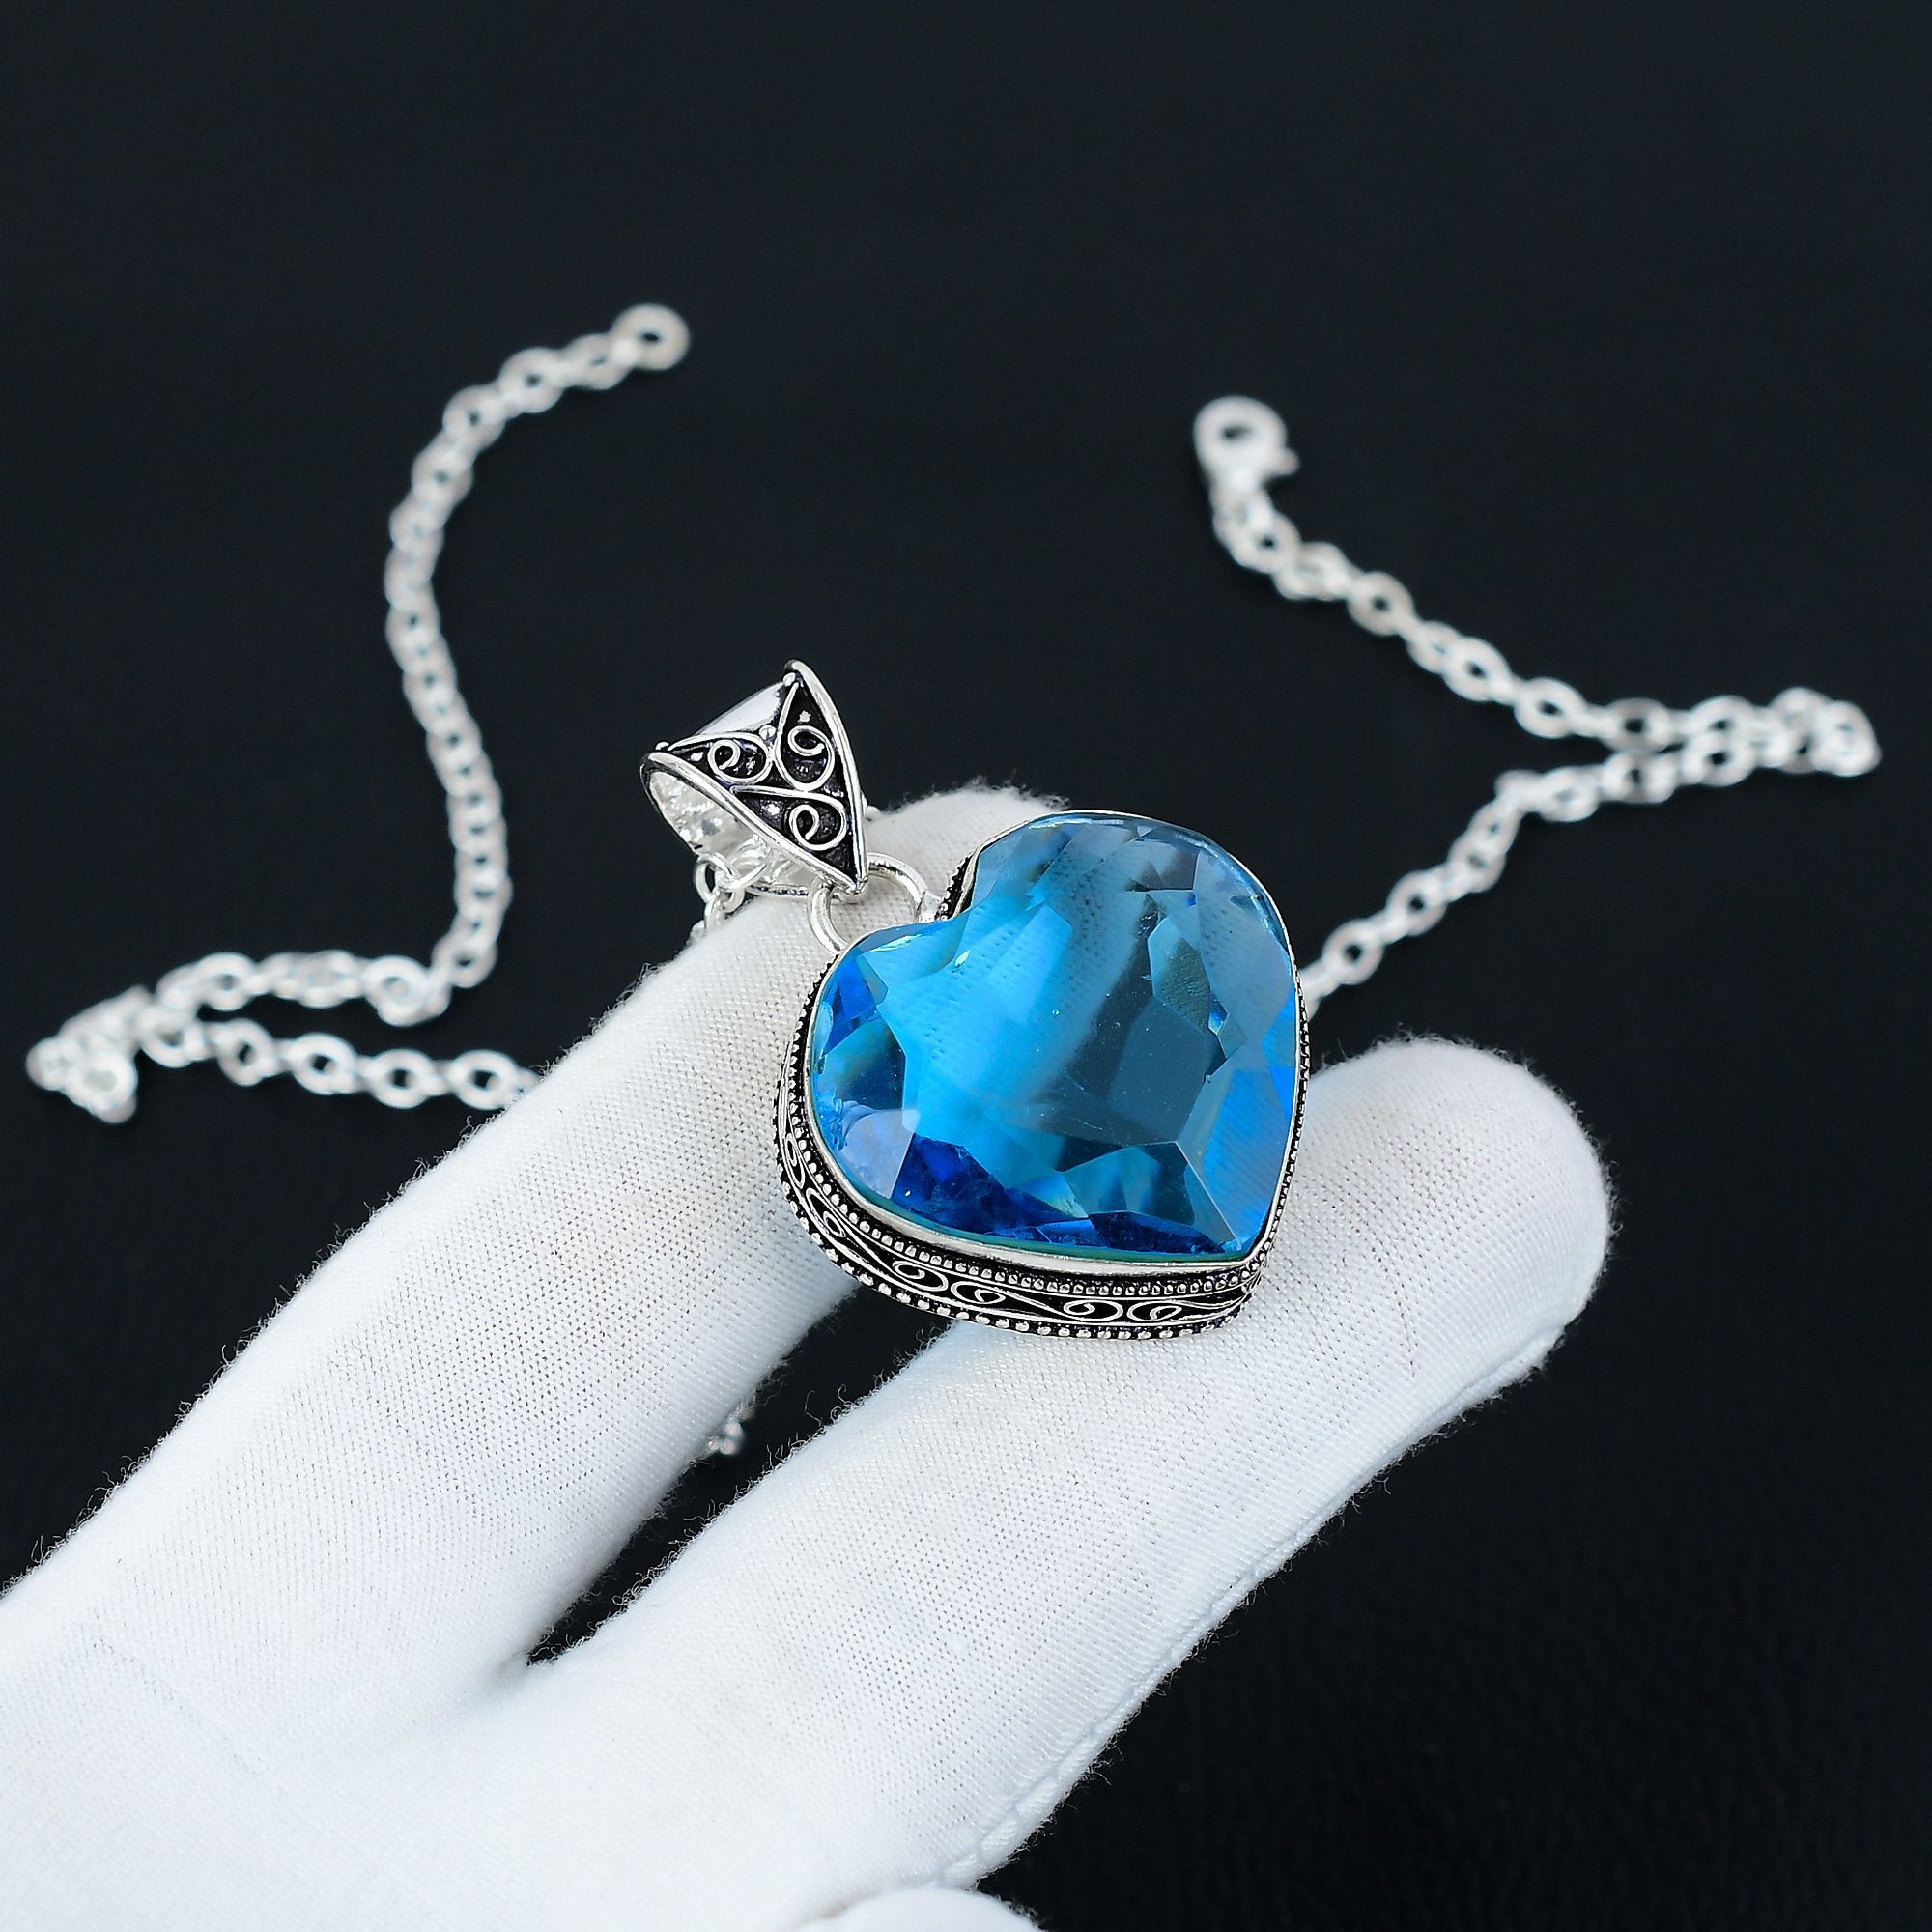 Swiss Blue Topaz Gemstone Handmade 925 Sterling Silver Pendant Necklace Jewelry Blue Topaz Silver Pendant Blue Topaz Pendant Gift For Lover